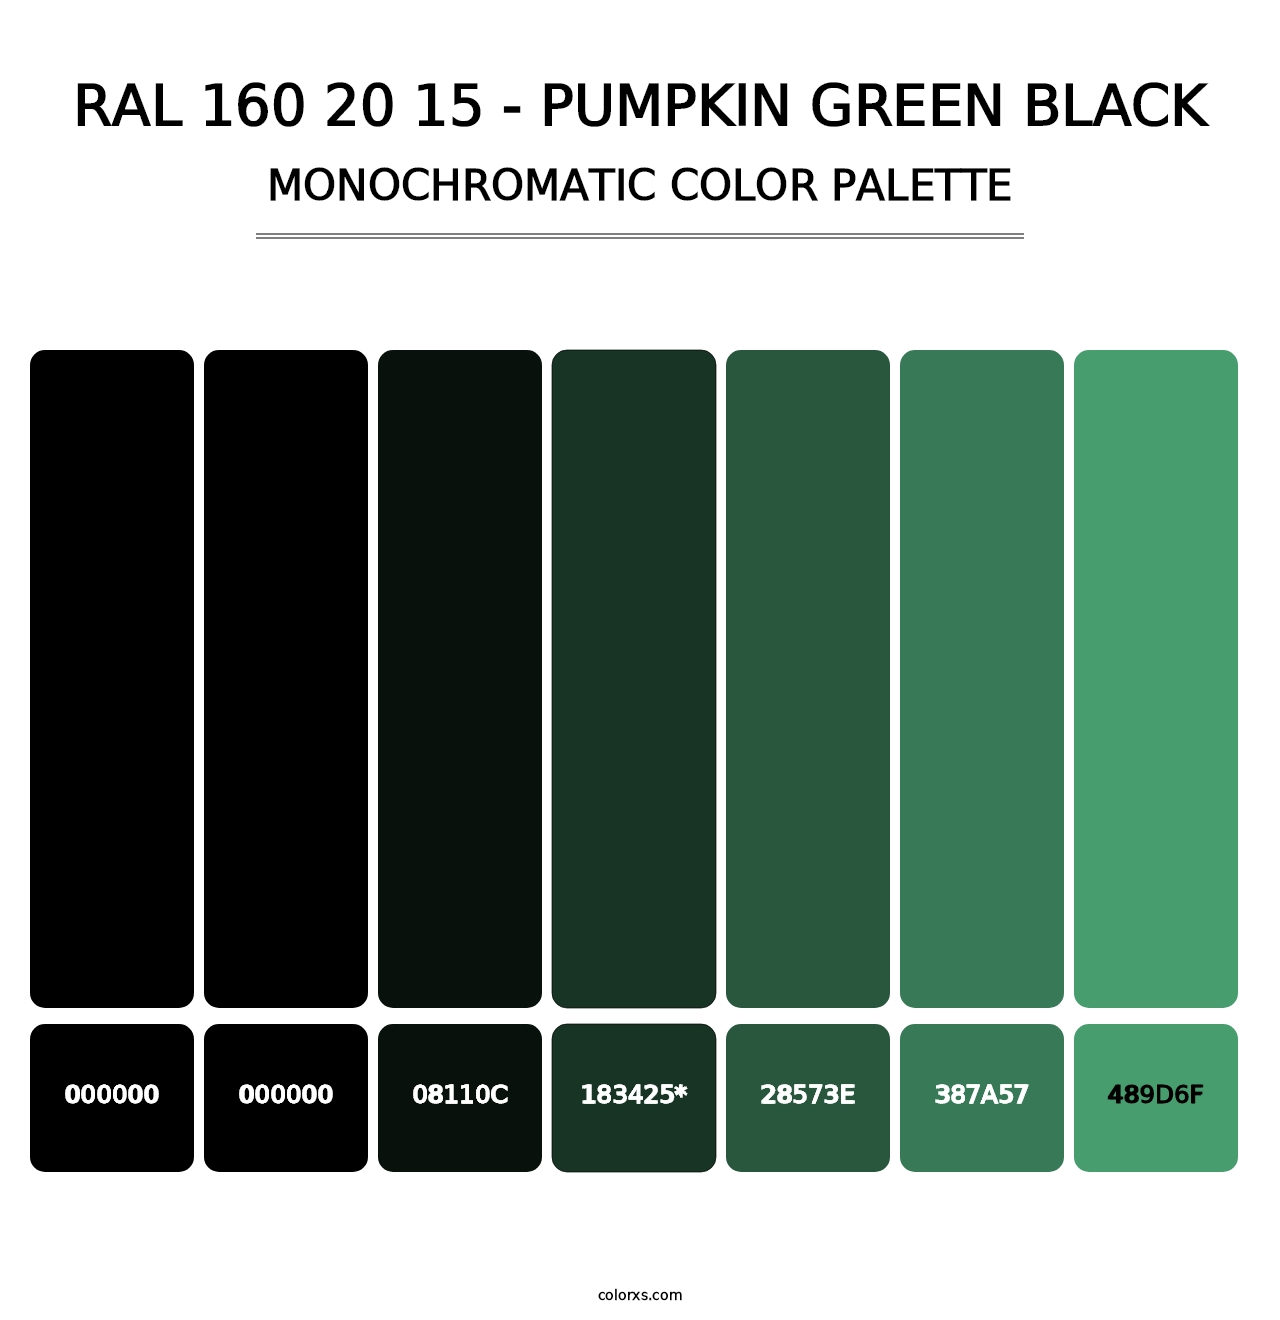 RAL 160 20 15 - Pumpkin Green Black - Monochromatic Color Palette